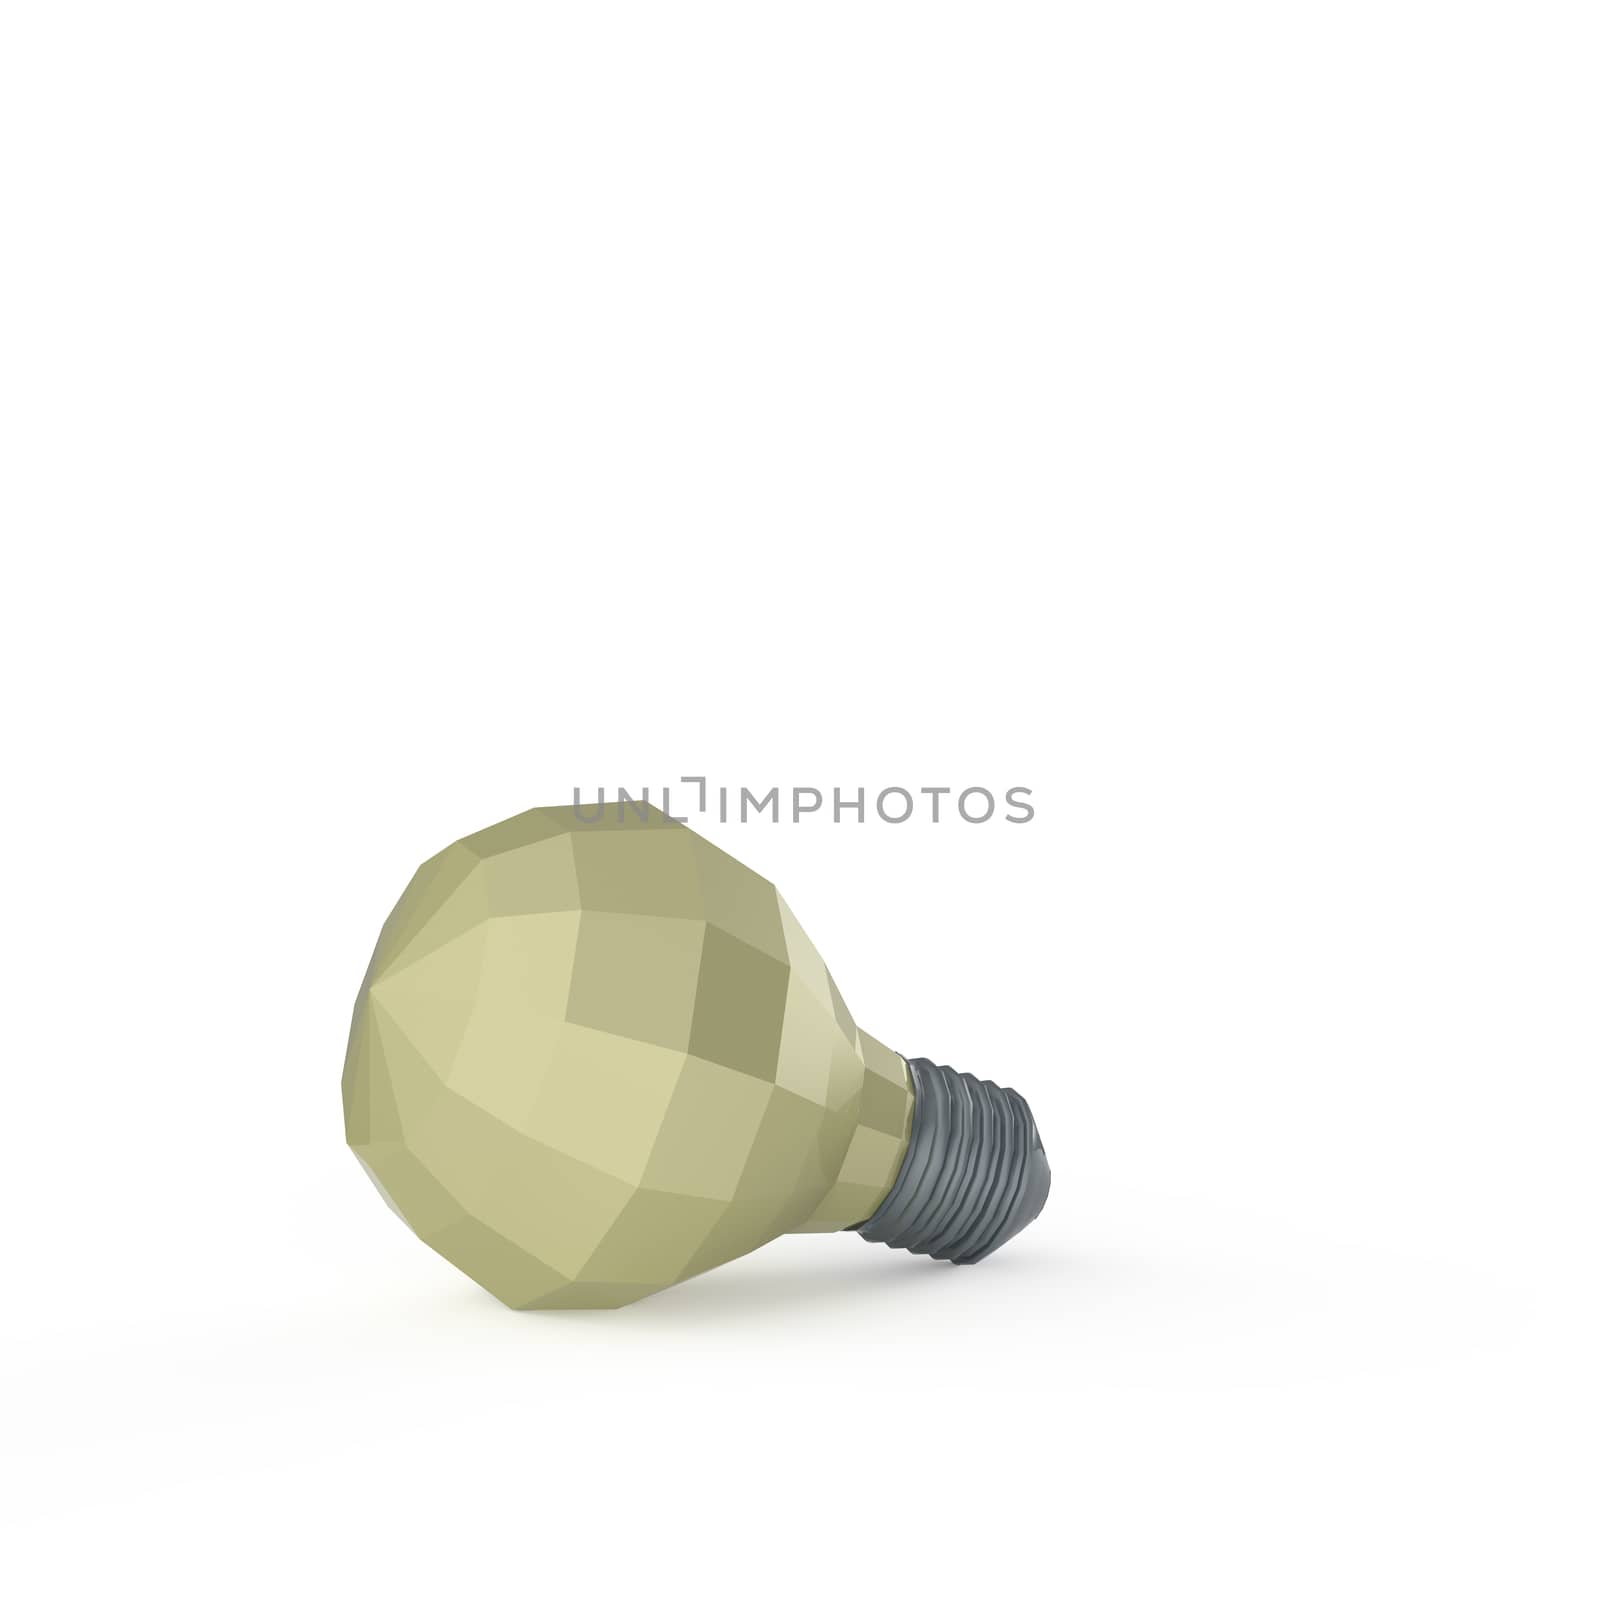 low polygonal 3d light bulb concept symbol